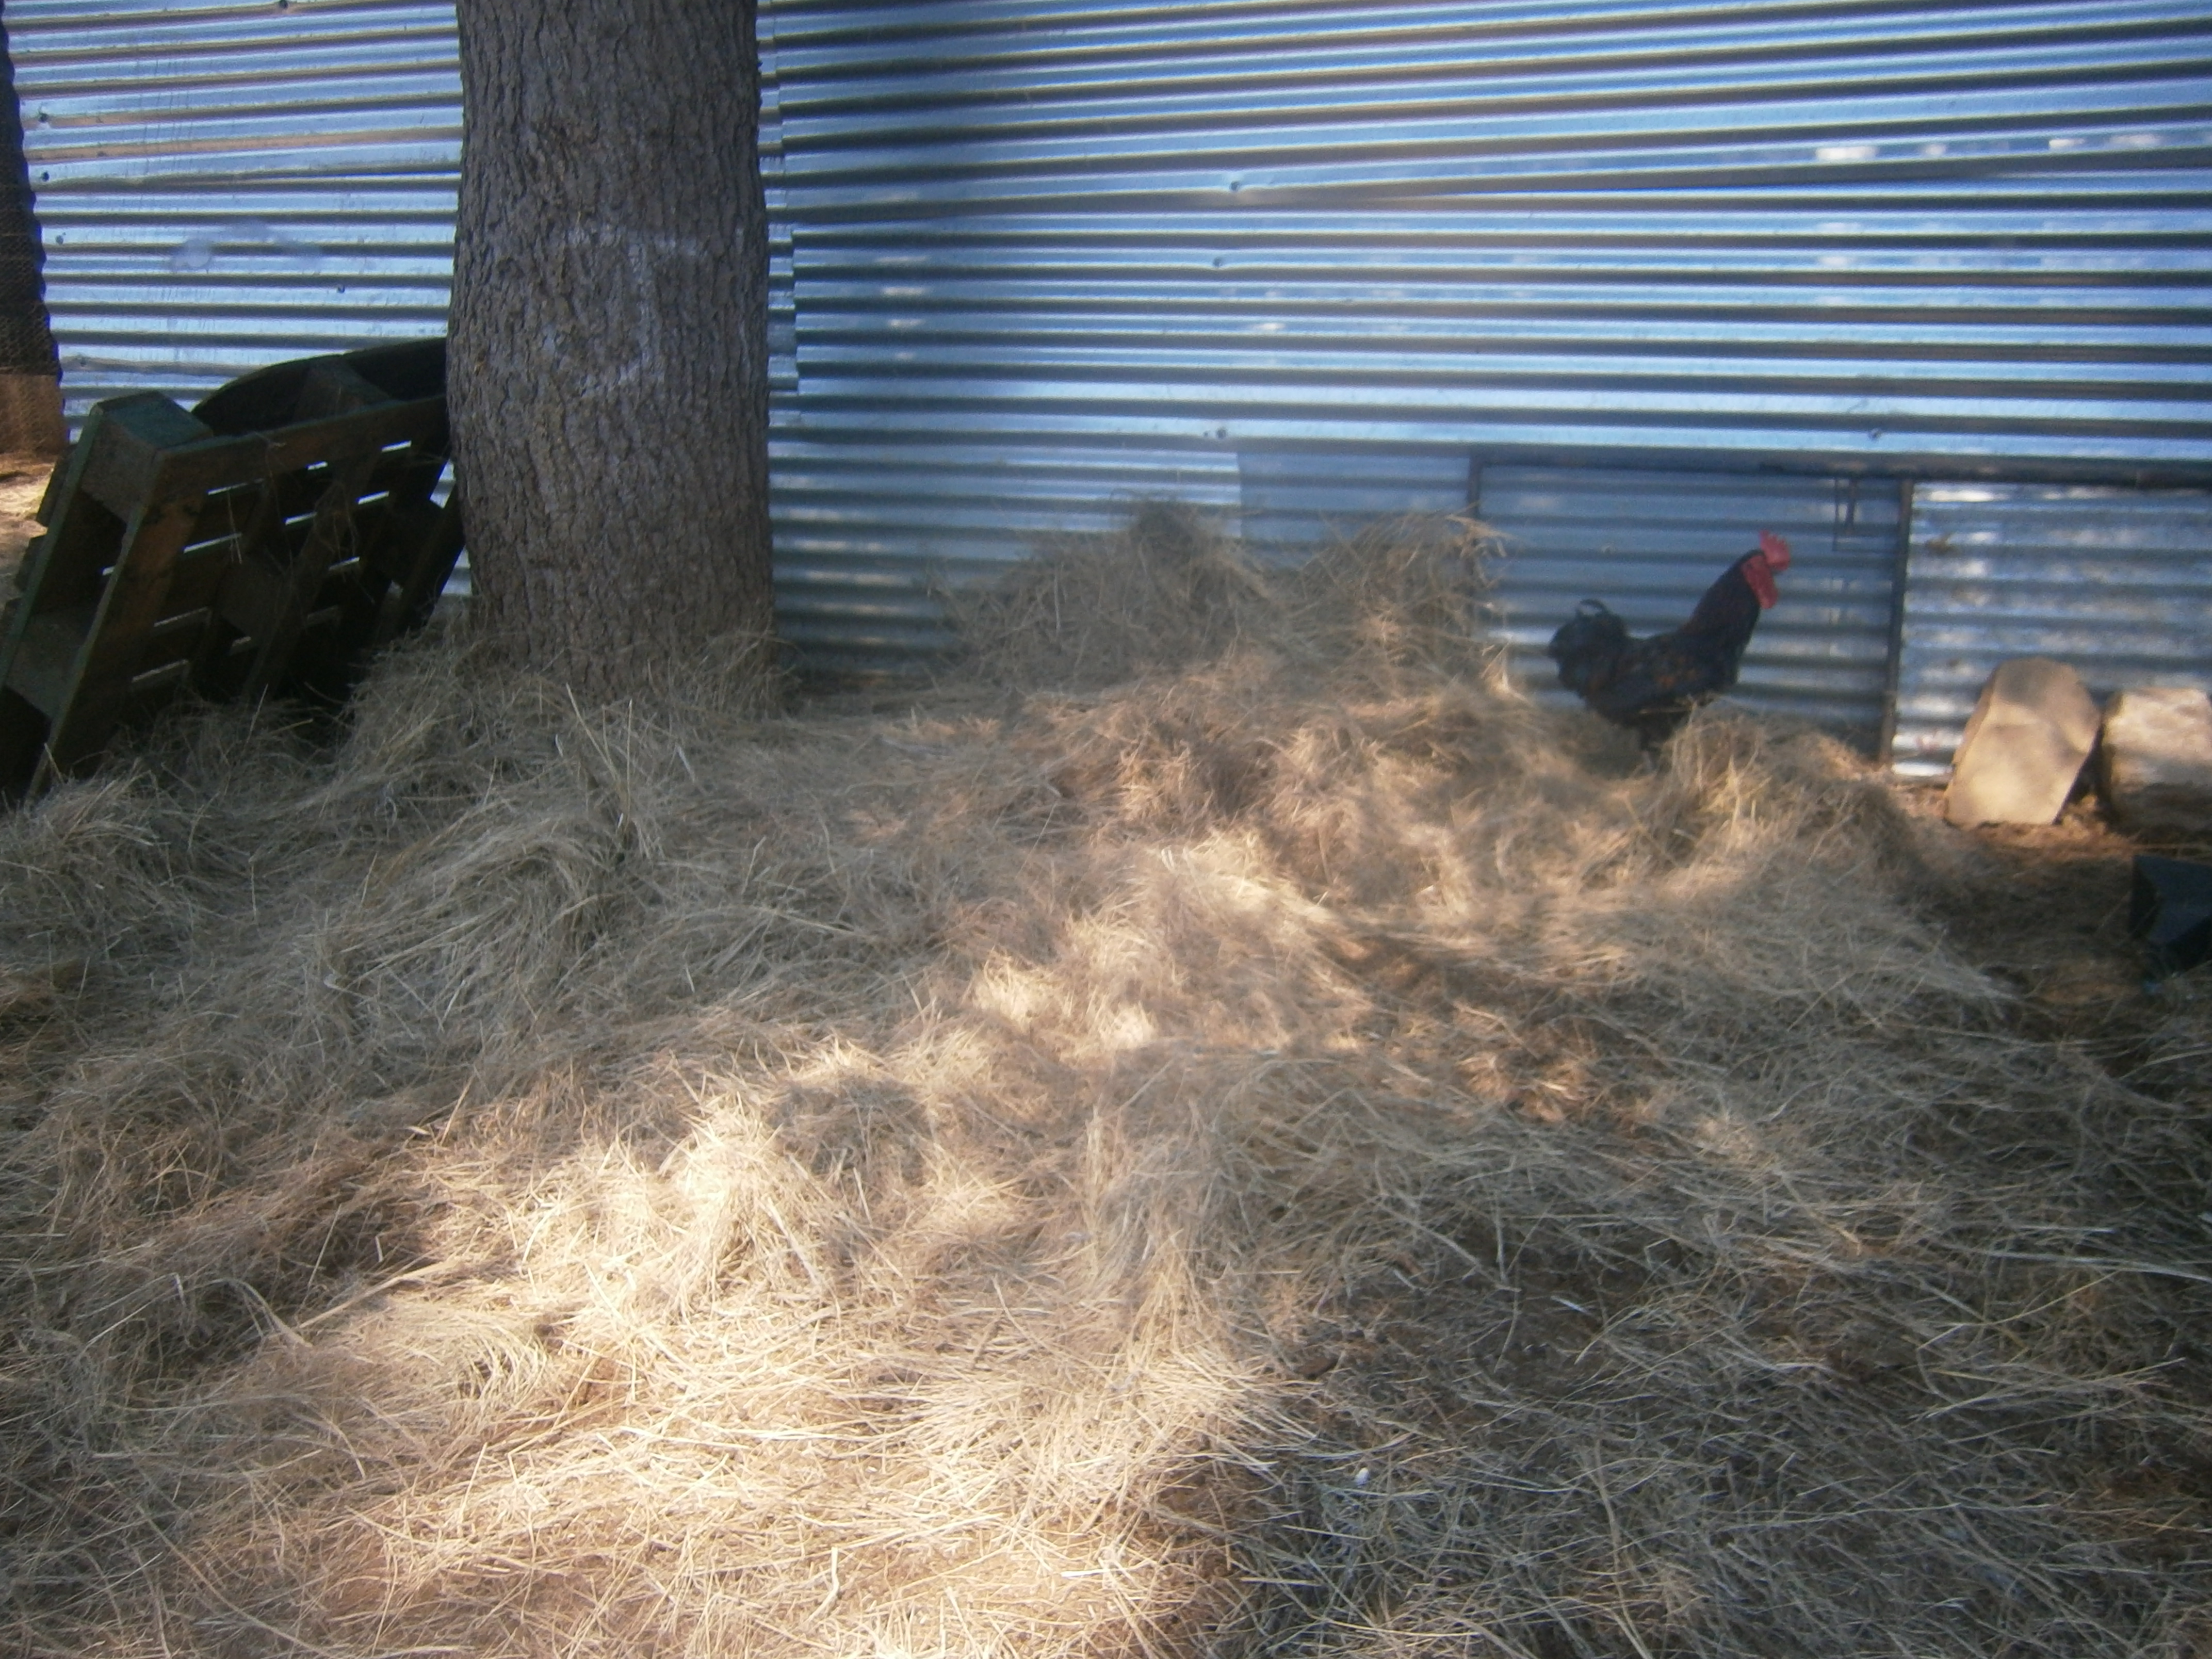 Blackie digging in the hay!